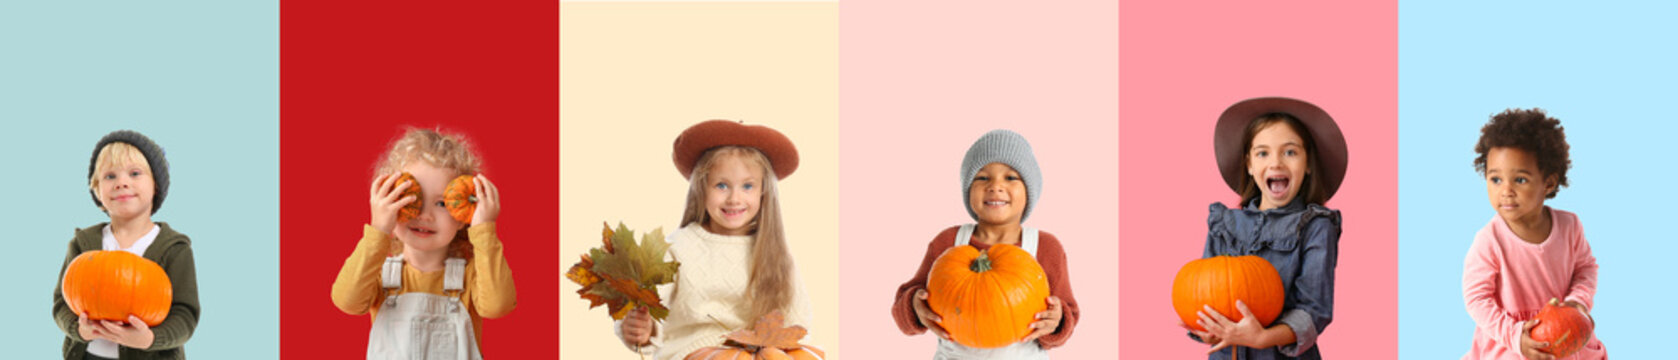 Little children with pumpkins on color background